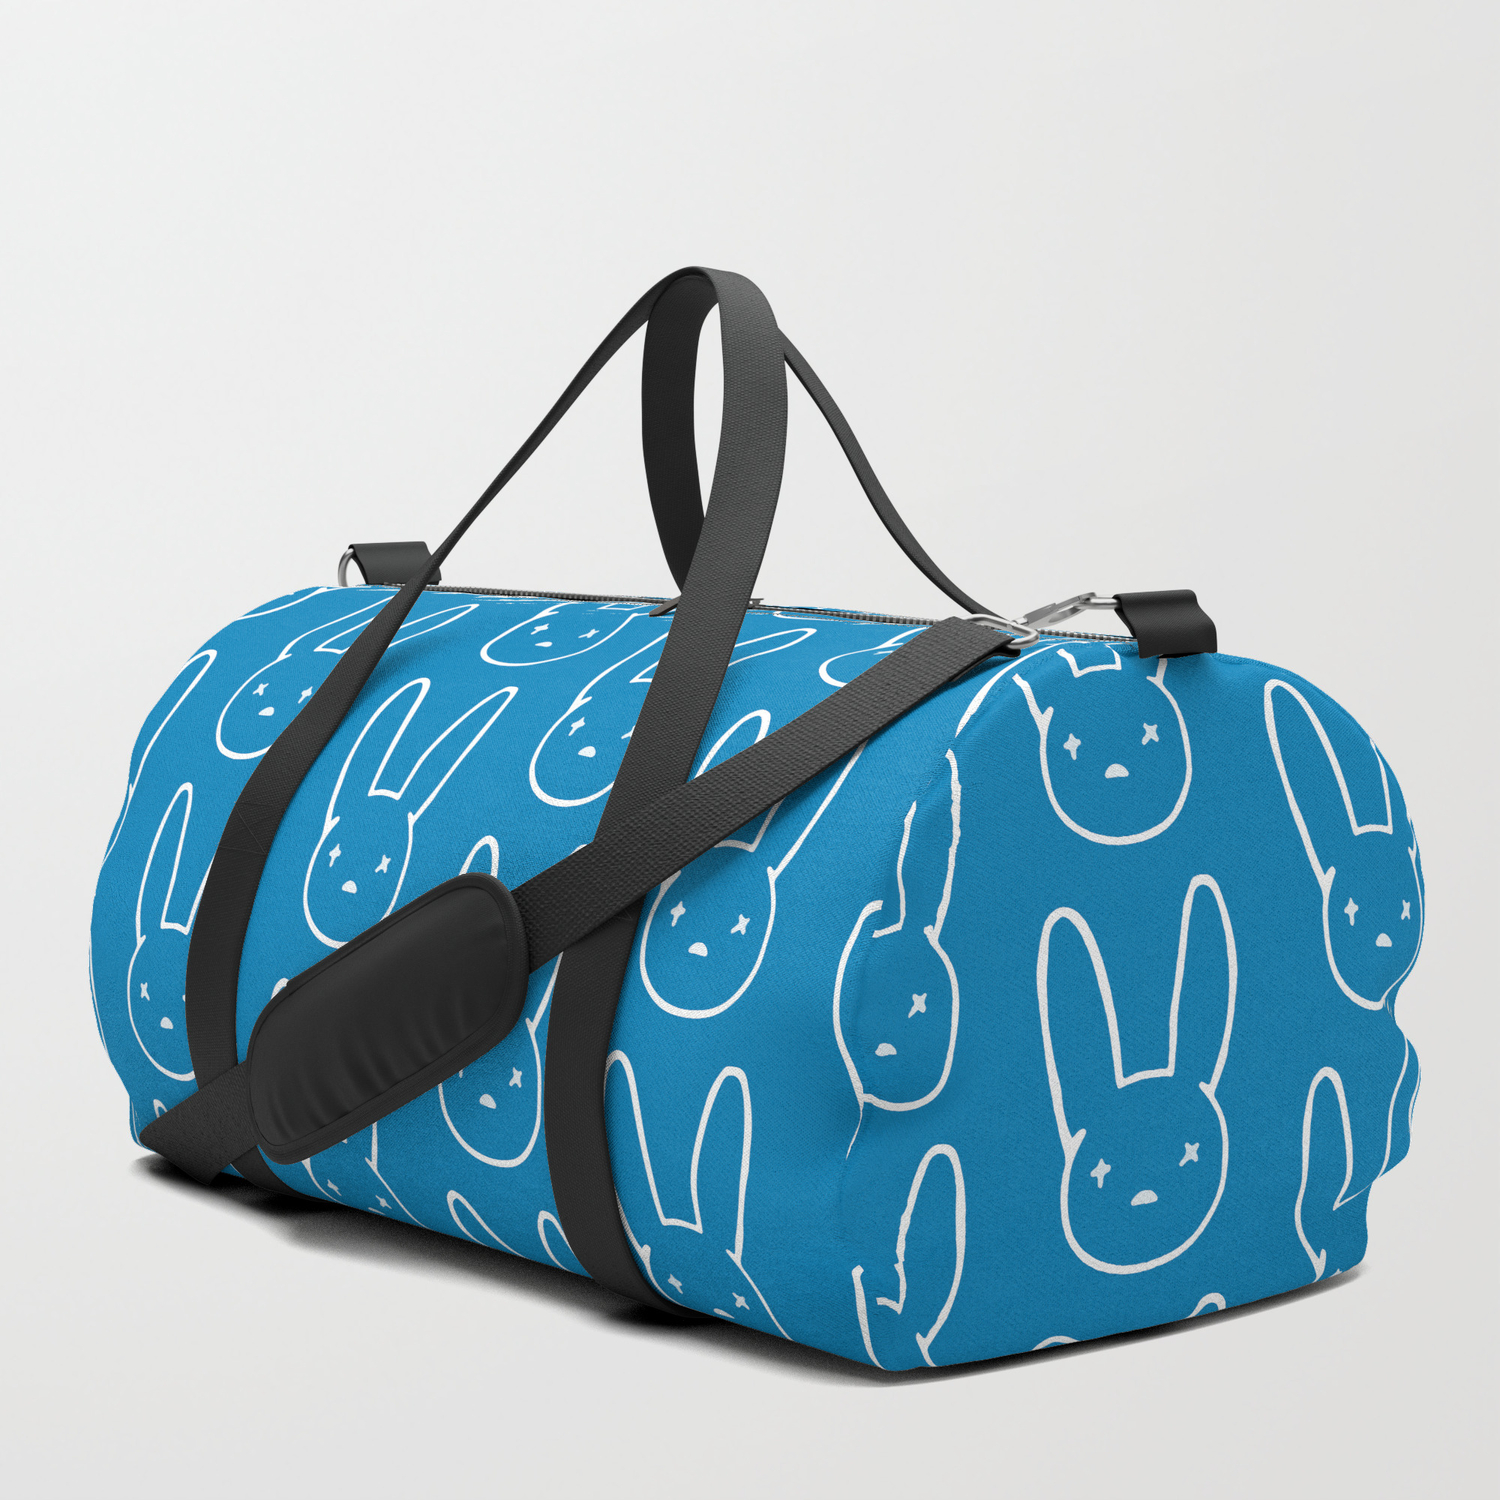 WIHVE Gym Duffel Bag Bunny Faces Heart Slogans Sports Lightweight Canvas Travel Luggage Bag 